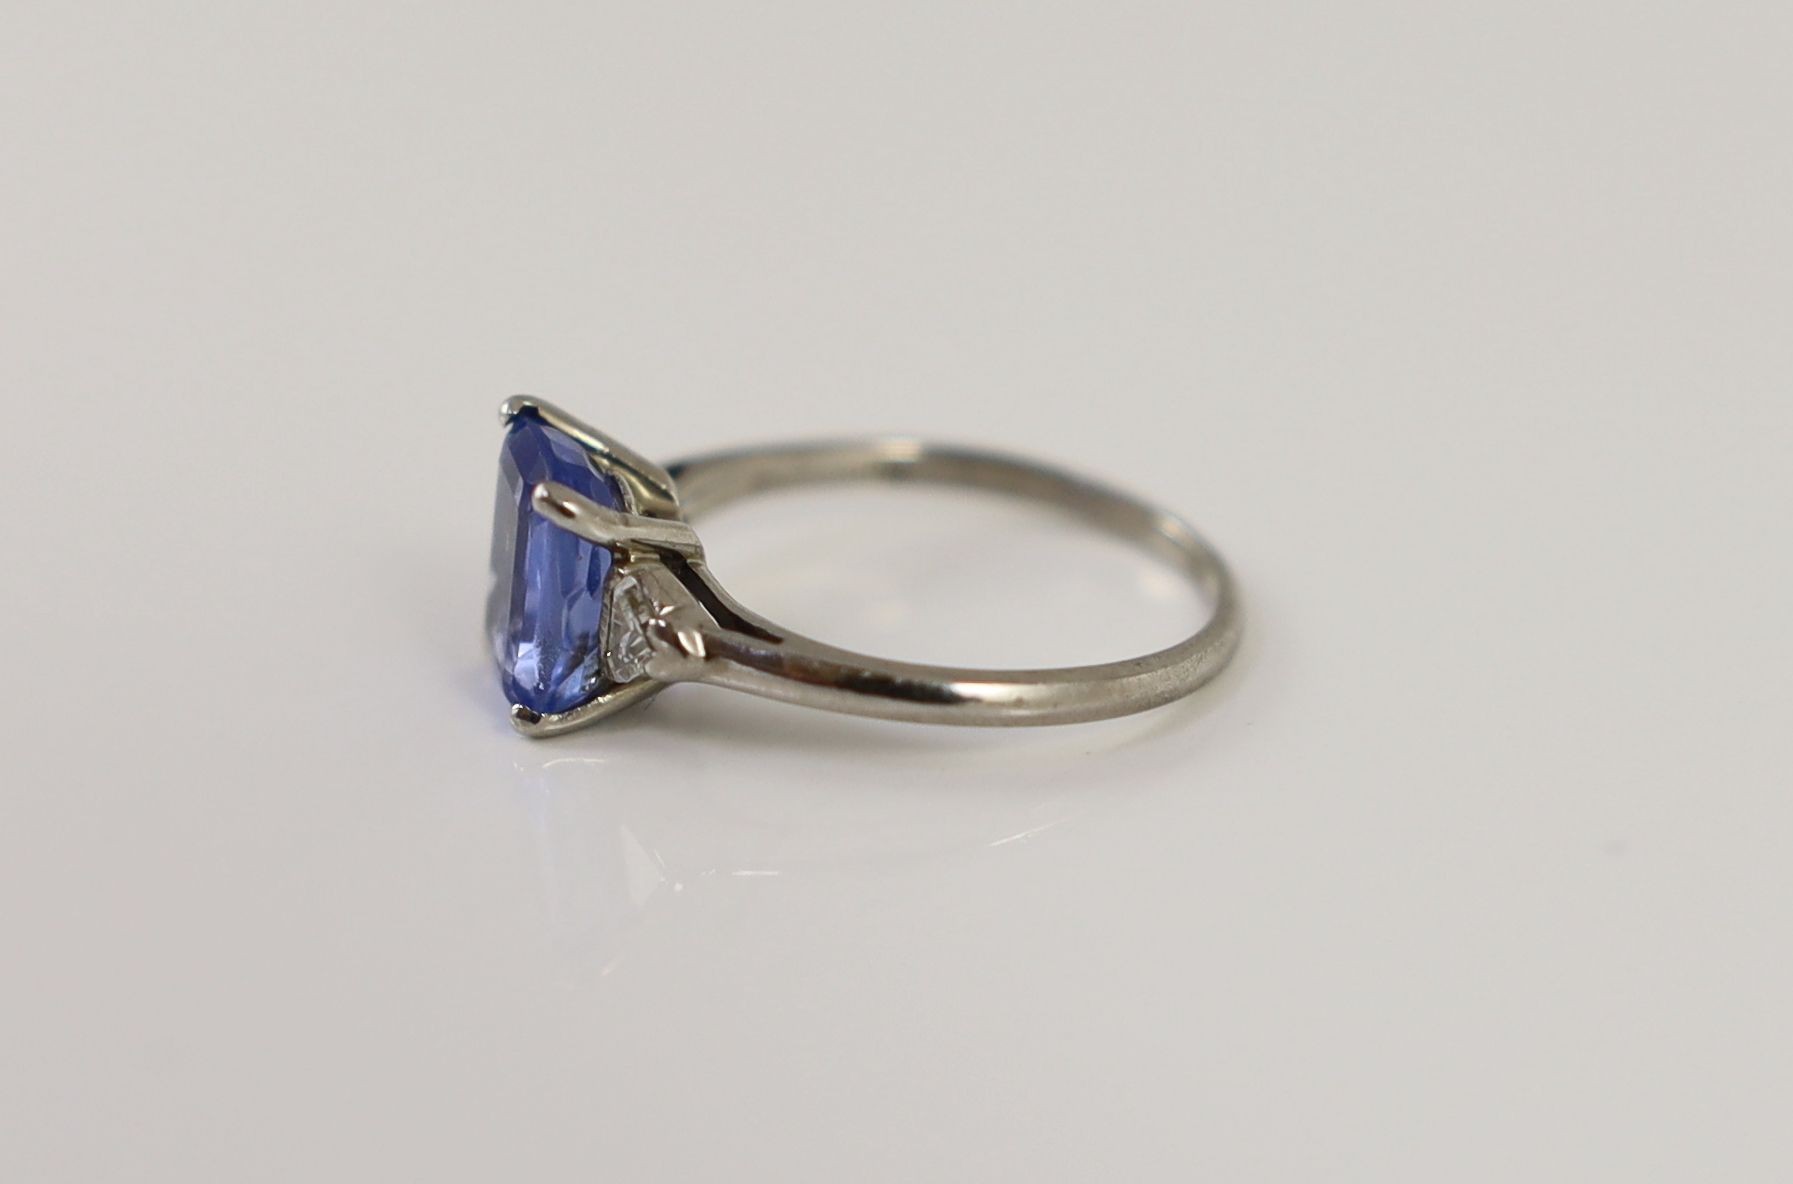 A platinum and palladium set single stone cushion cut sapphire ring, with triangular cut diamond set shoulders